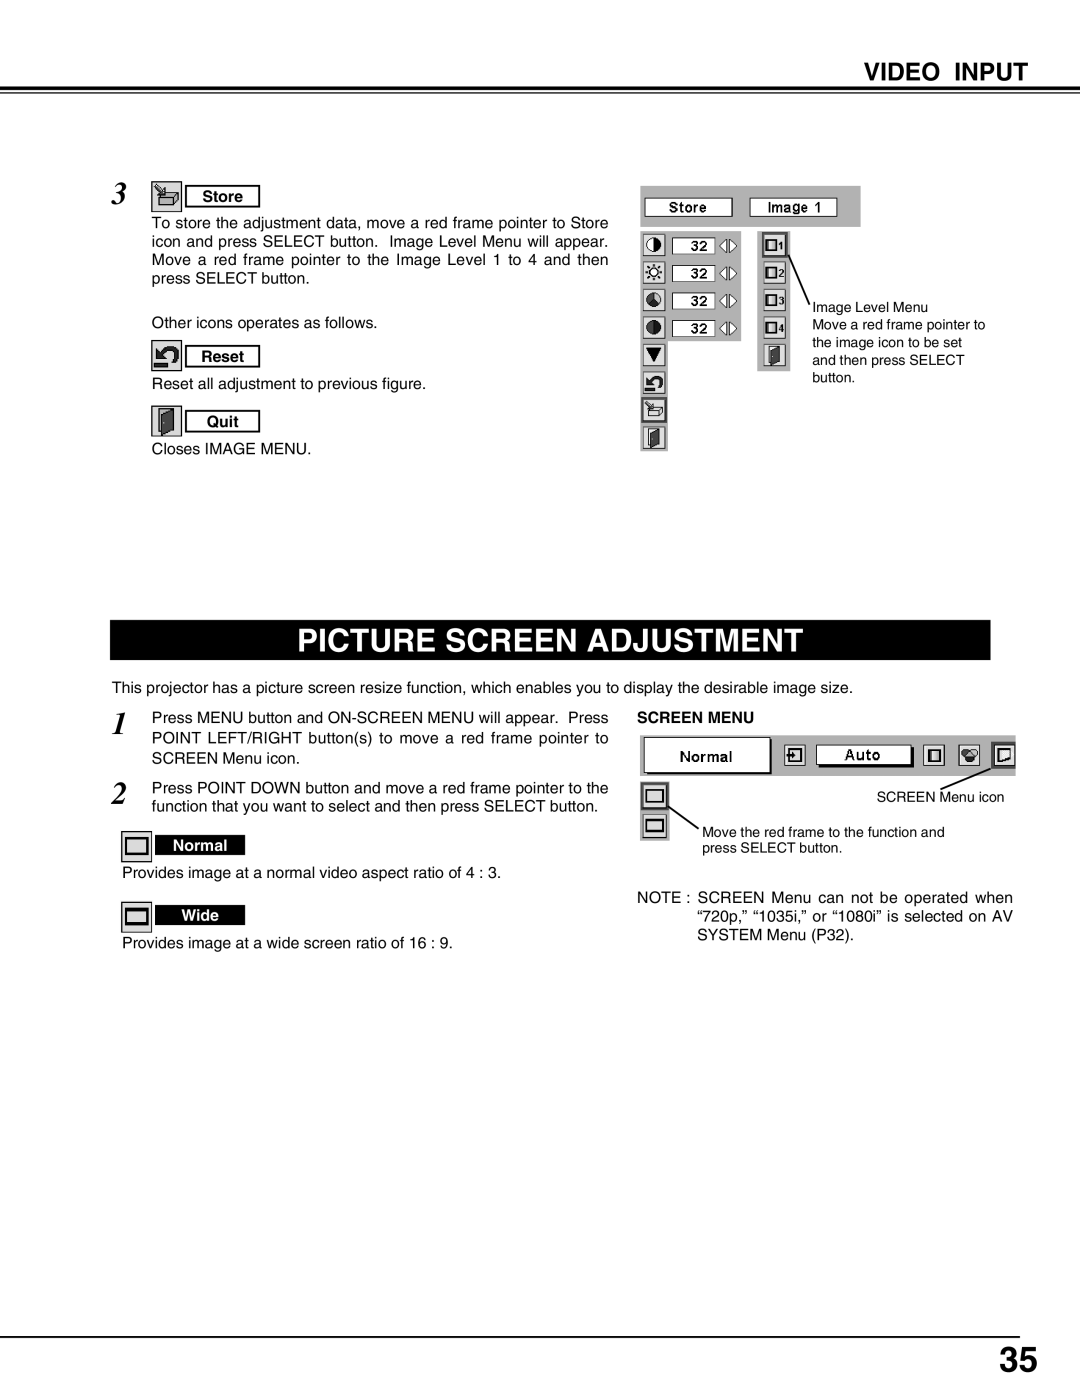 Christie Digital Systems 38-VIV207-01 user manual Picture Screen Adjustment, Video Input, Store, Reset, Quit, Screen Menu 